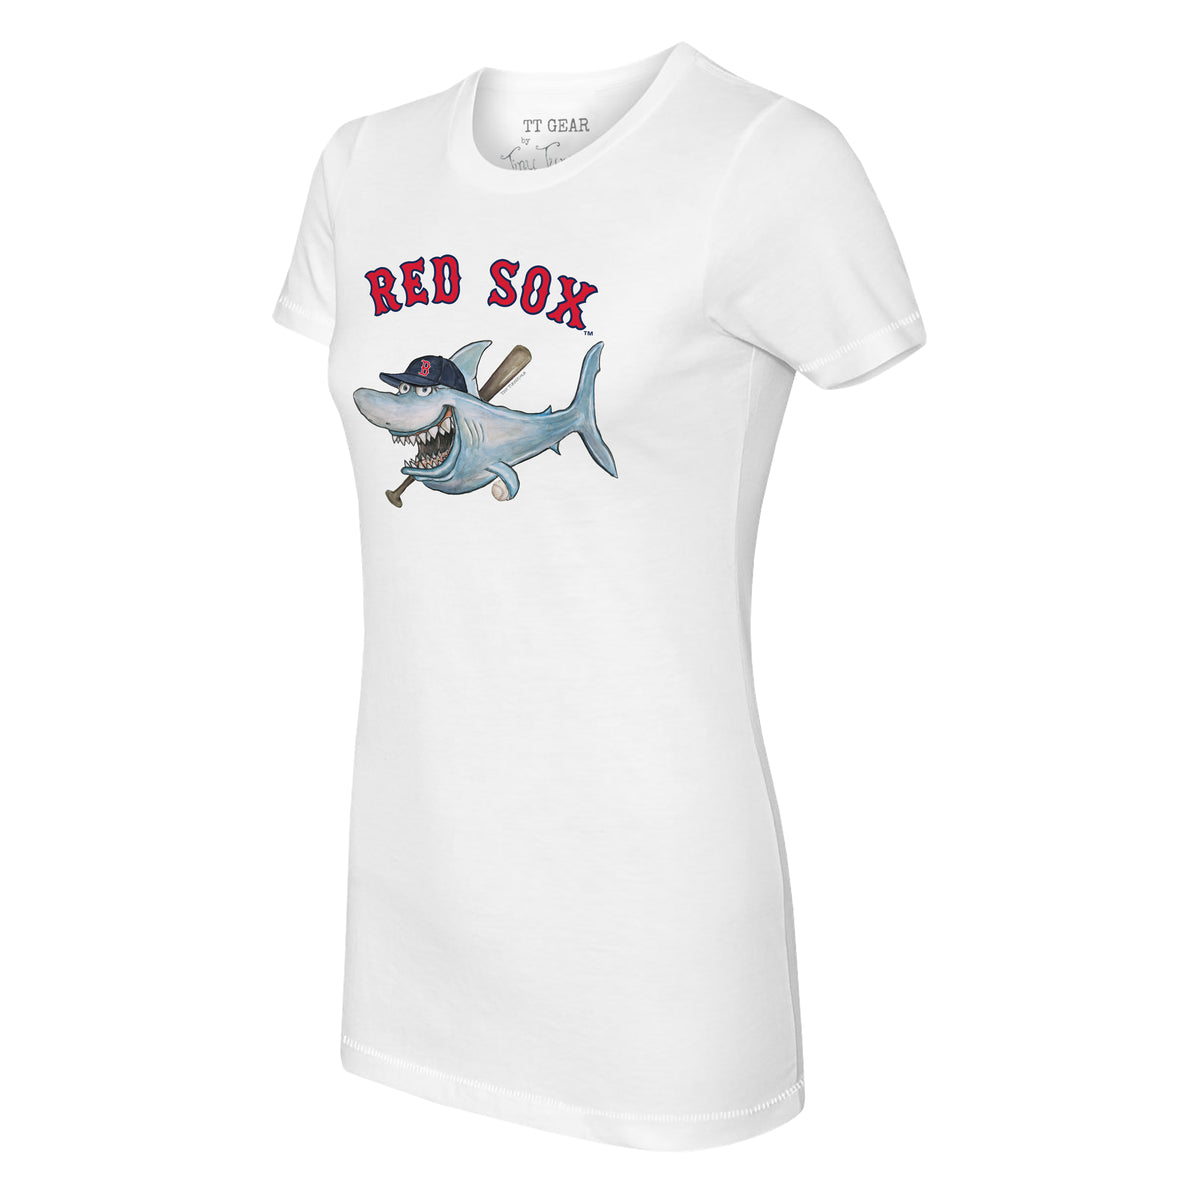 Boston Red Sox Shark Tee Shirt